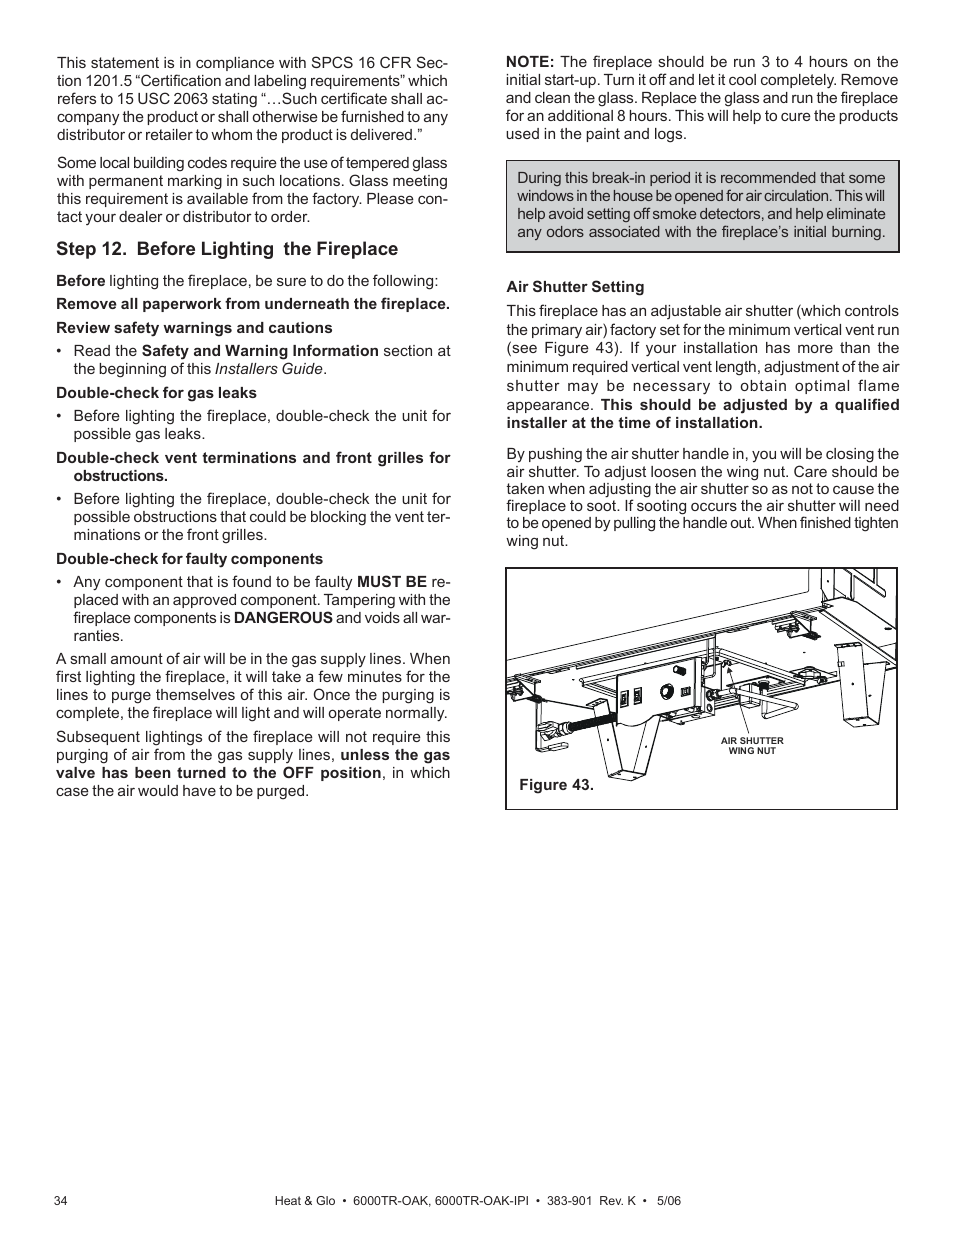 Heat & Glo Fireplace 6000TR-OAK User Manual | Page 30 / 31 | Original ...